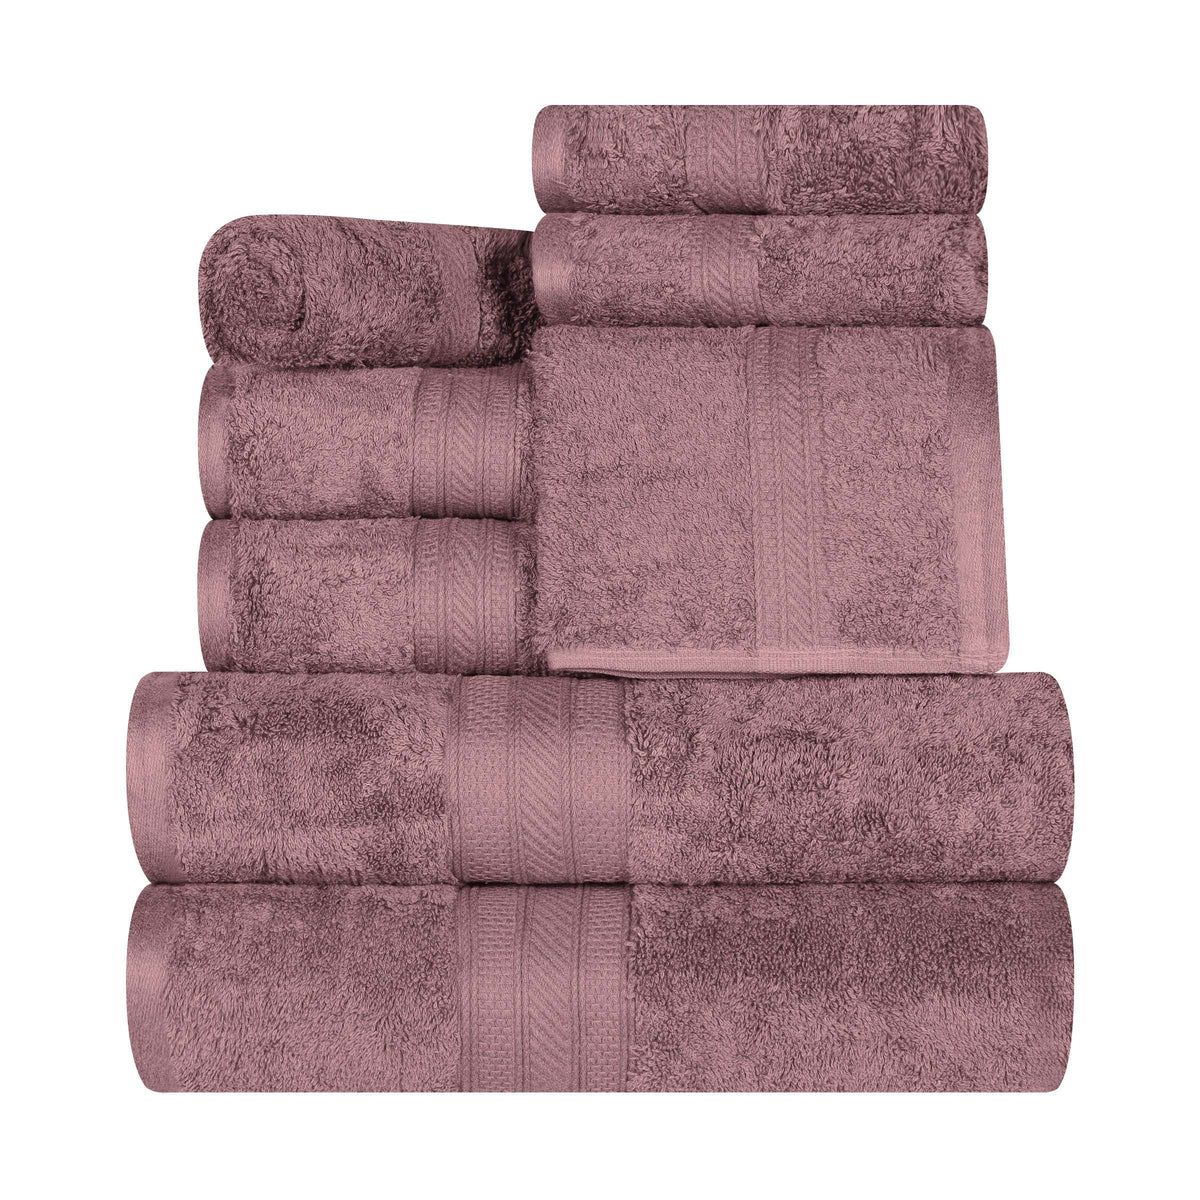 Cotton Heavyweight Absorbent Plush 8 Piece Towel Set - GrapeShake